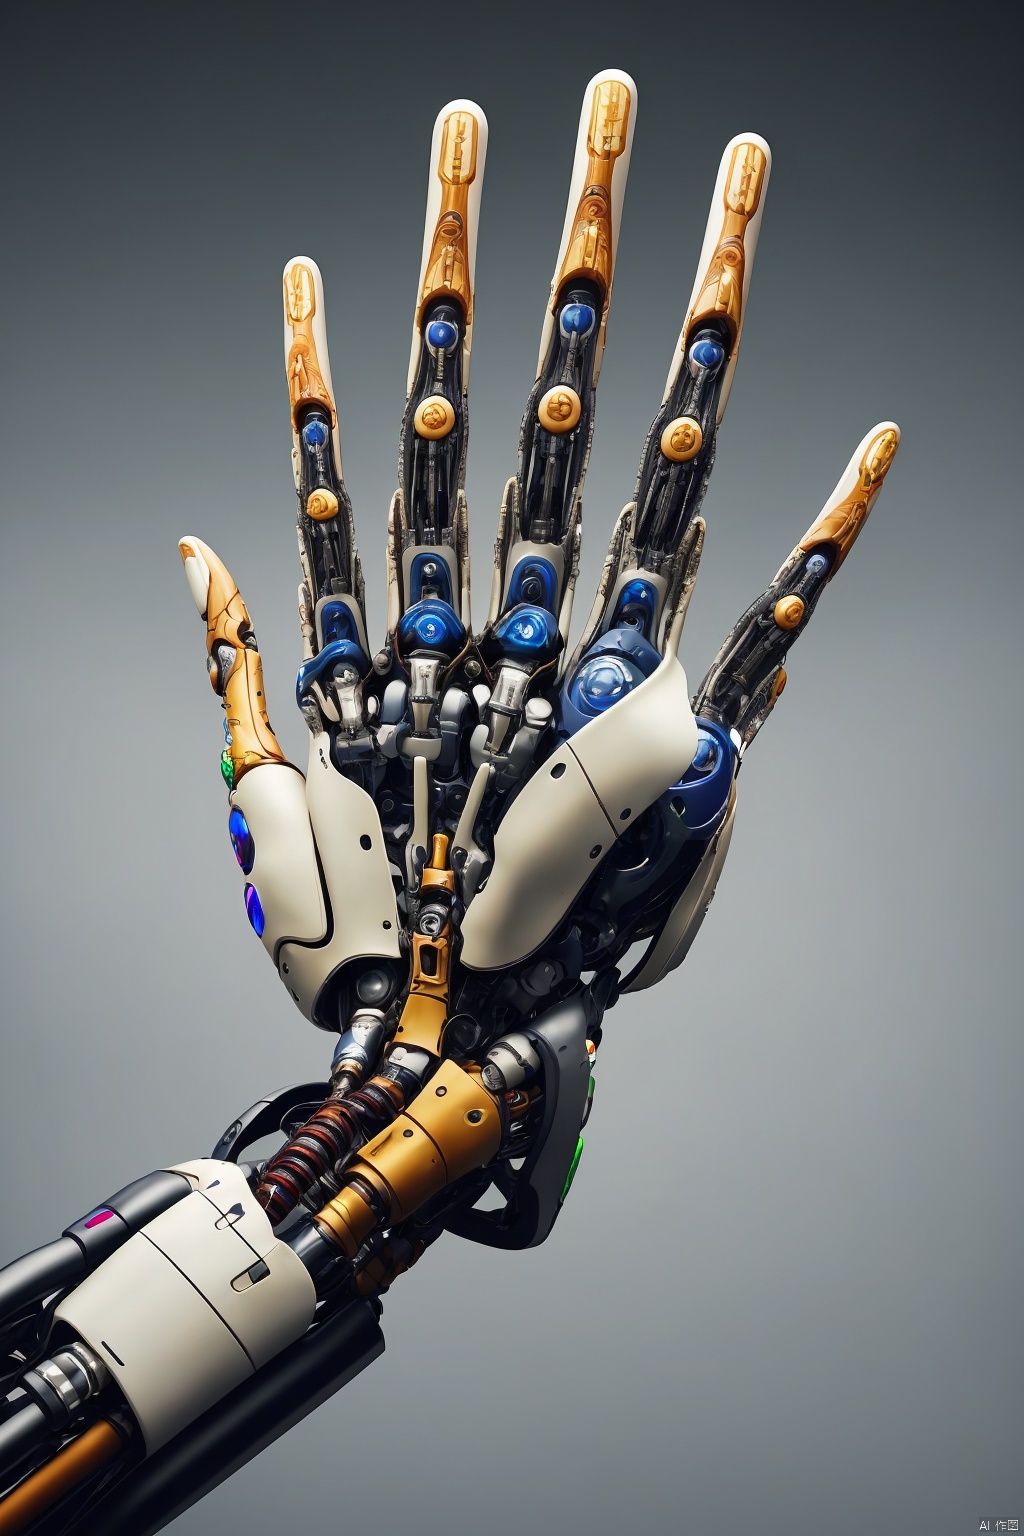  A robot hand, bionic human bone., A robotic prosthesis